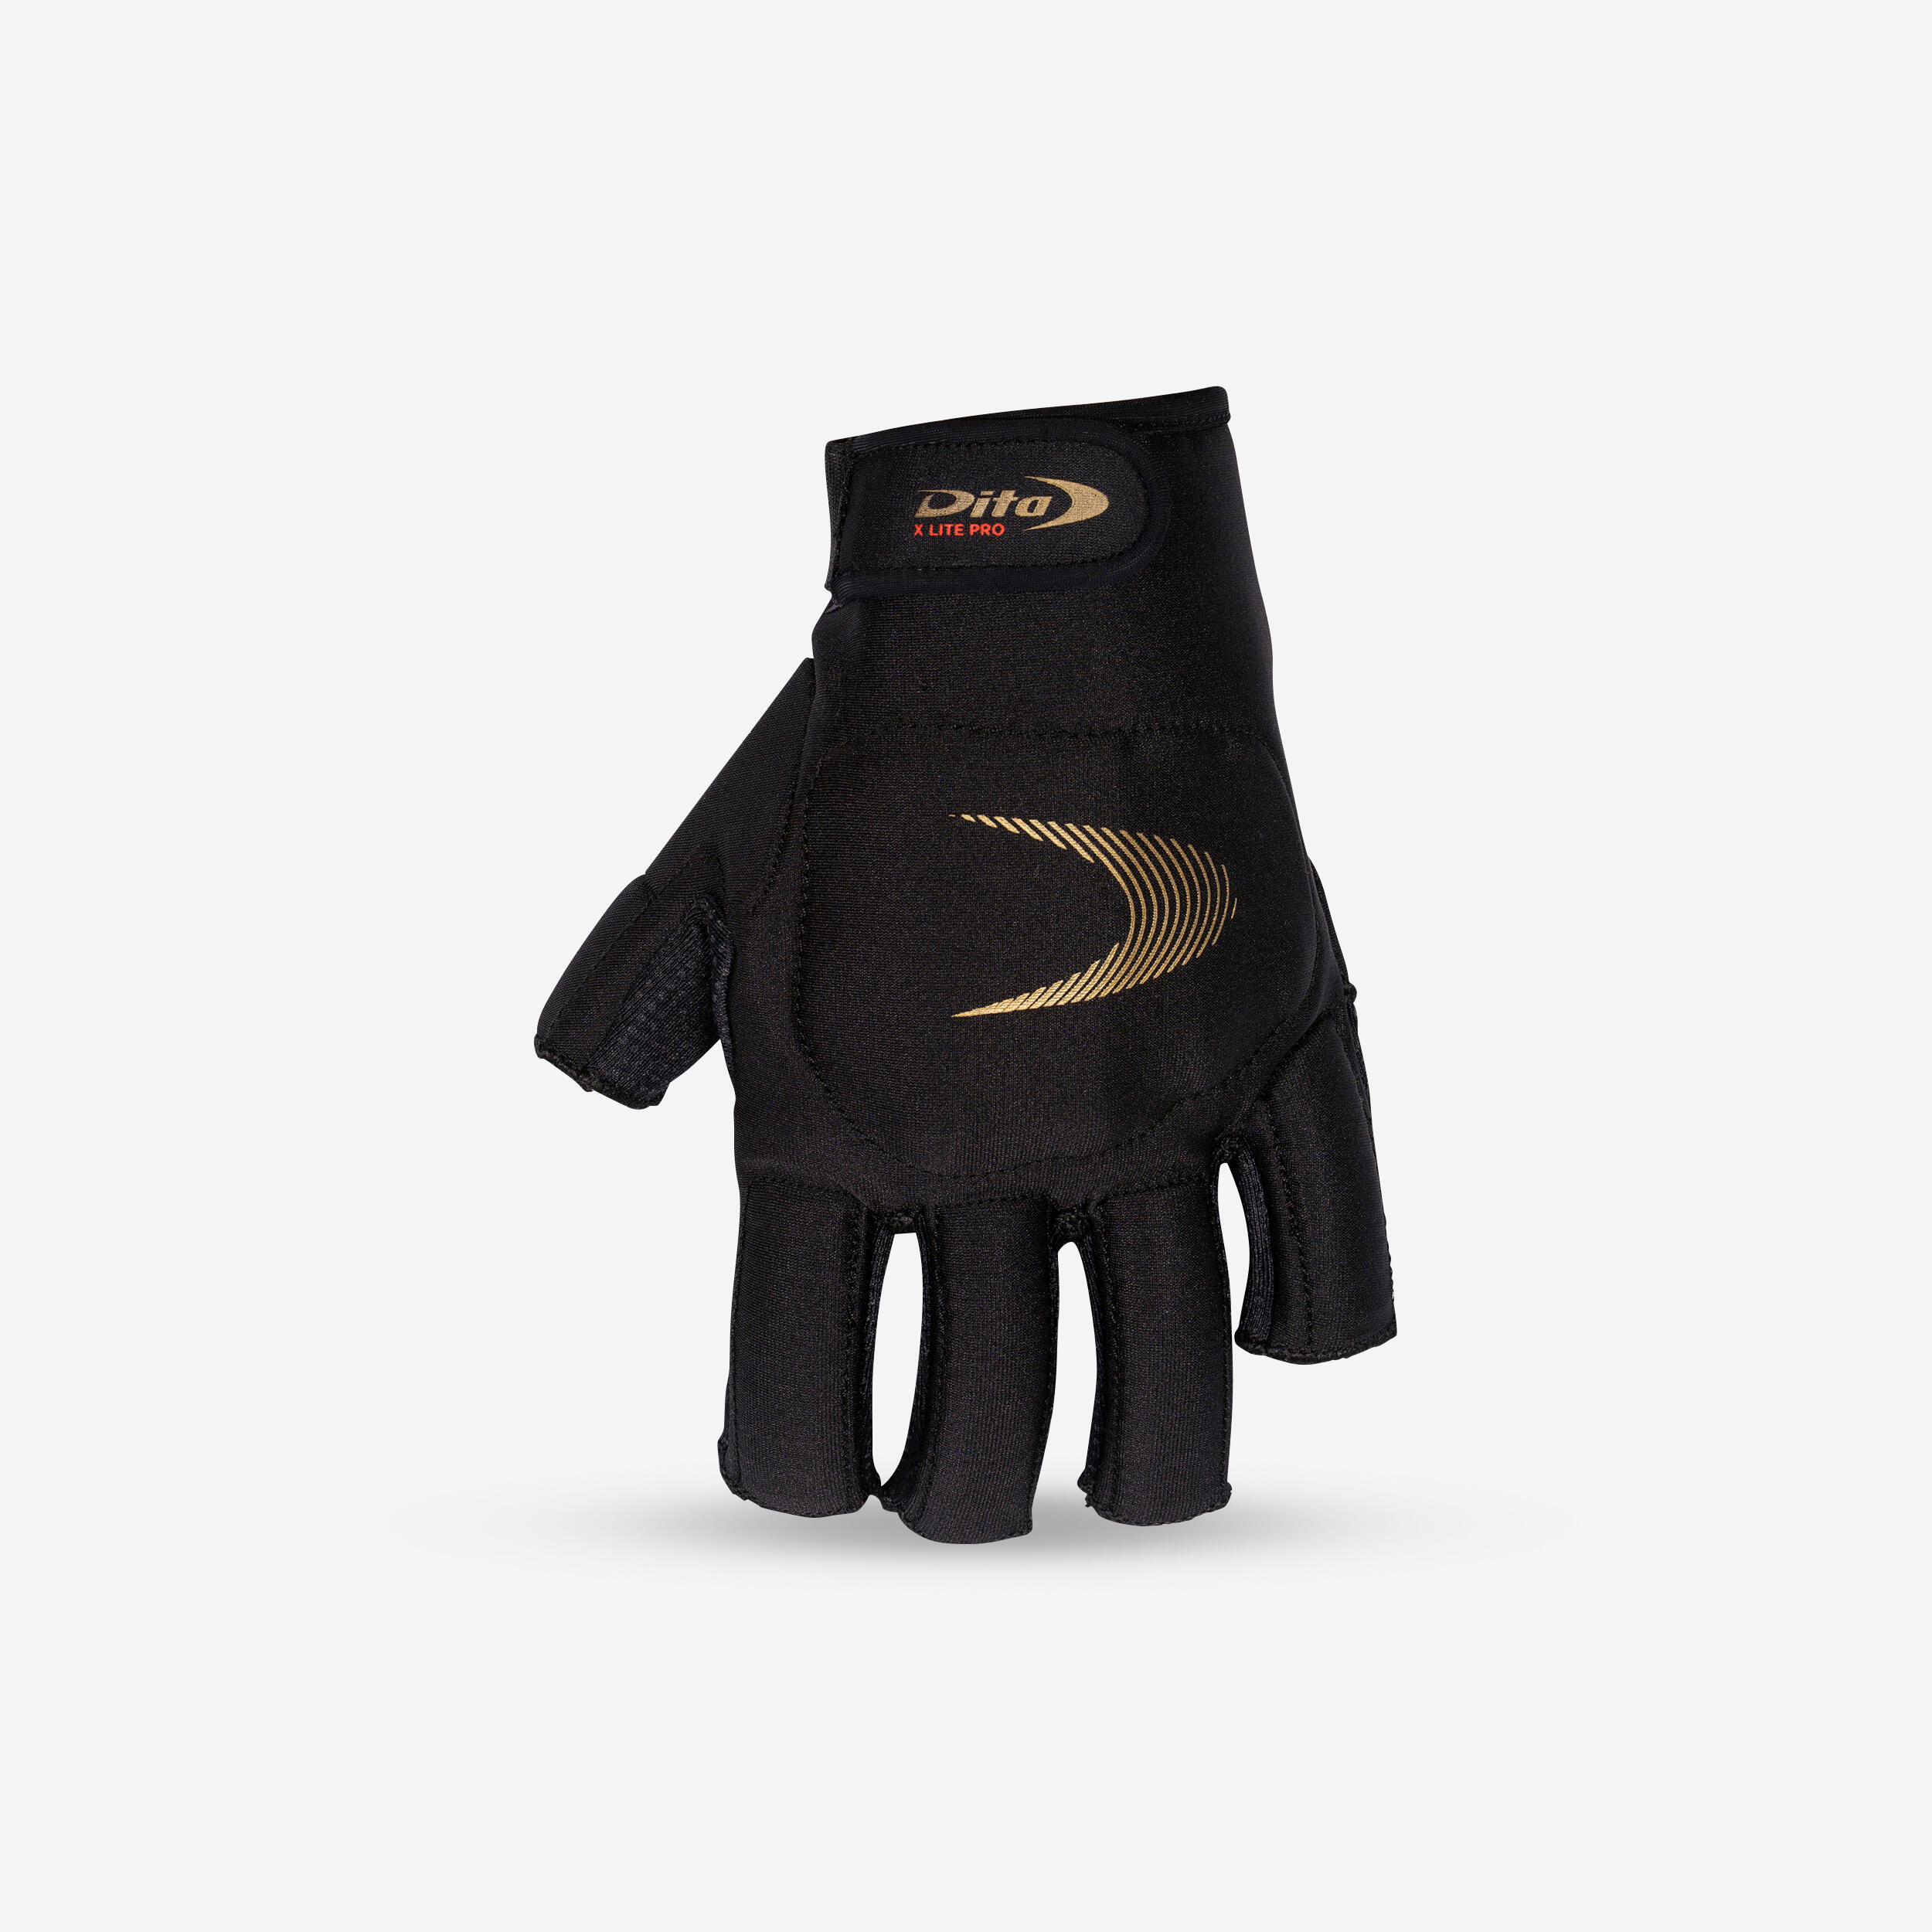 DITA Kids'/Adult Moderate-Intensity 2 Knuckle Hockey Gloves Xlite Pro - Black